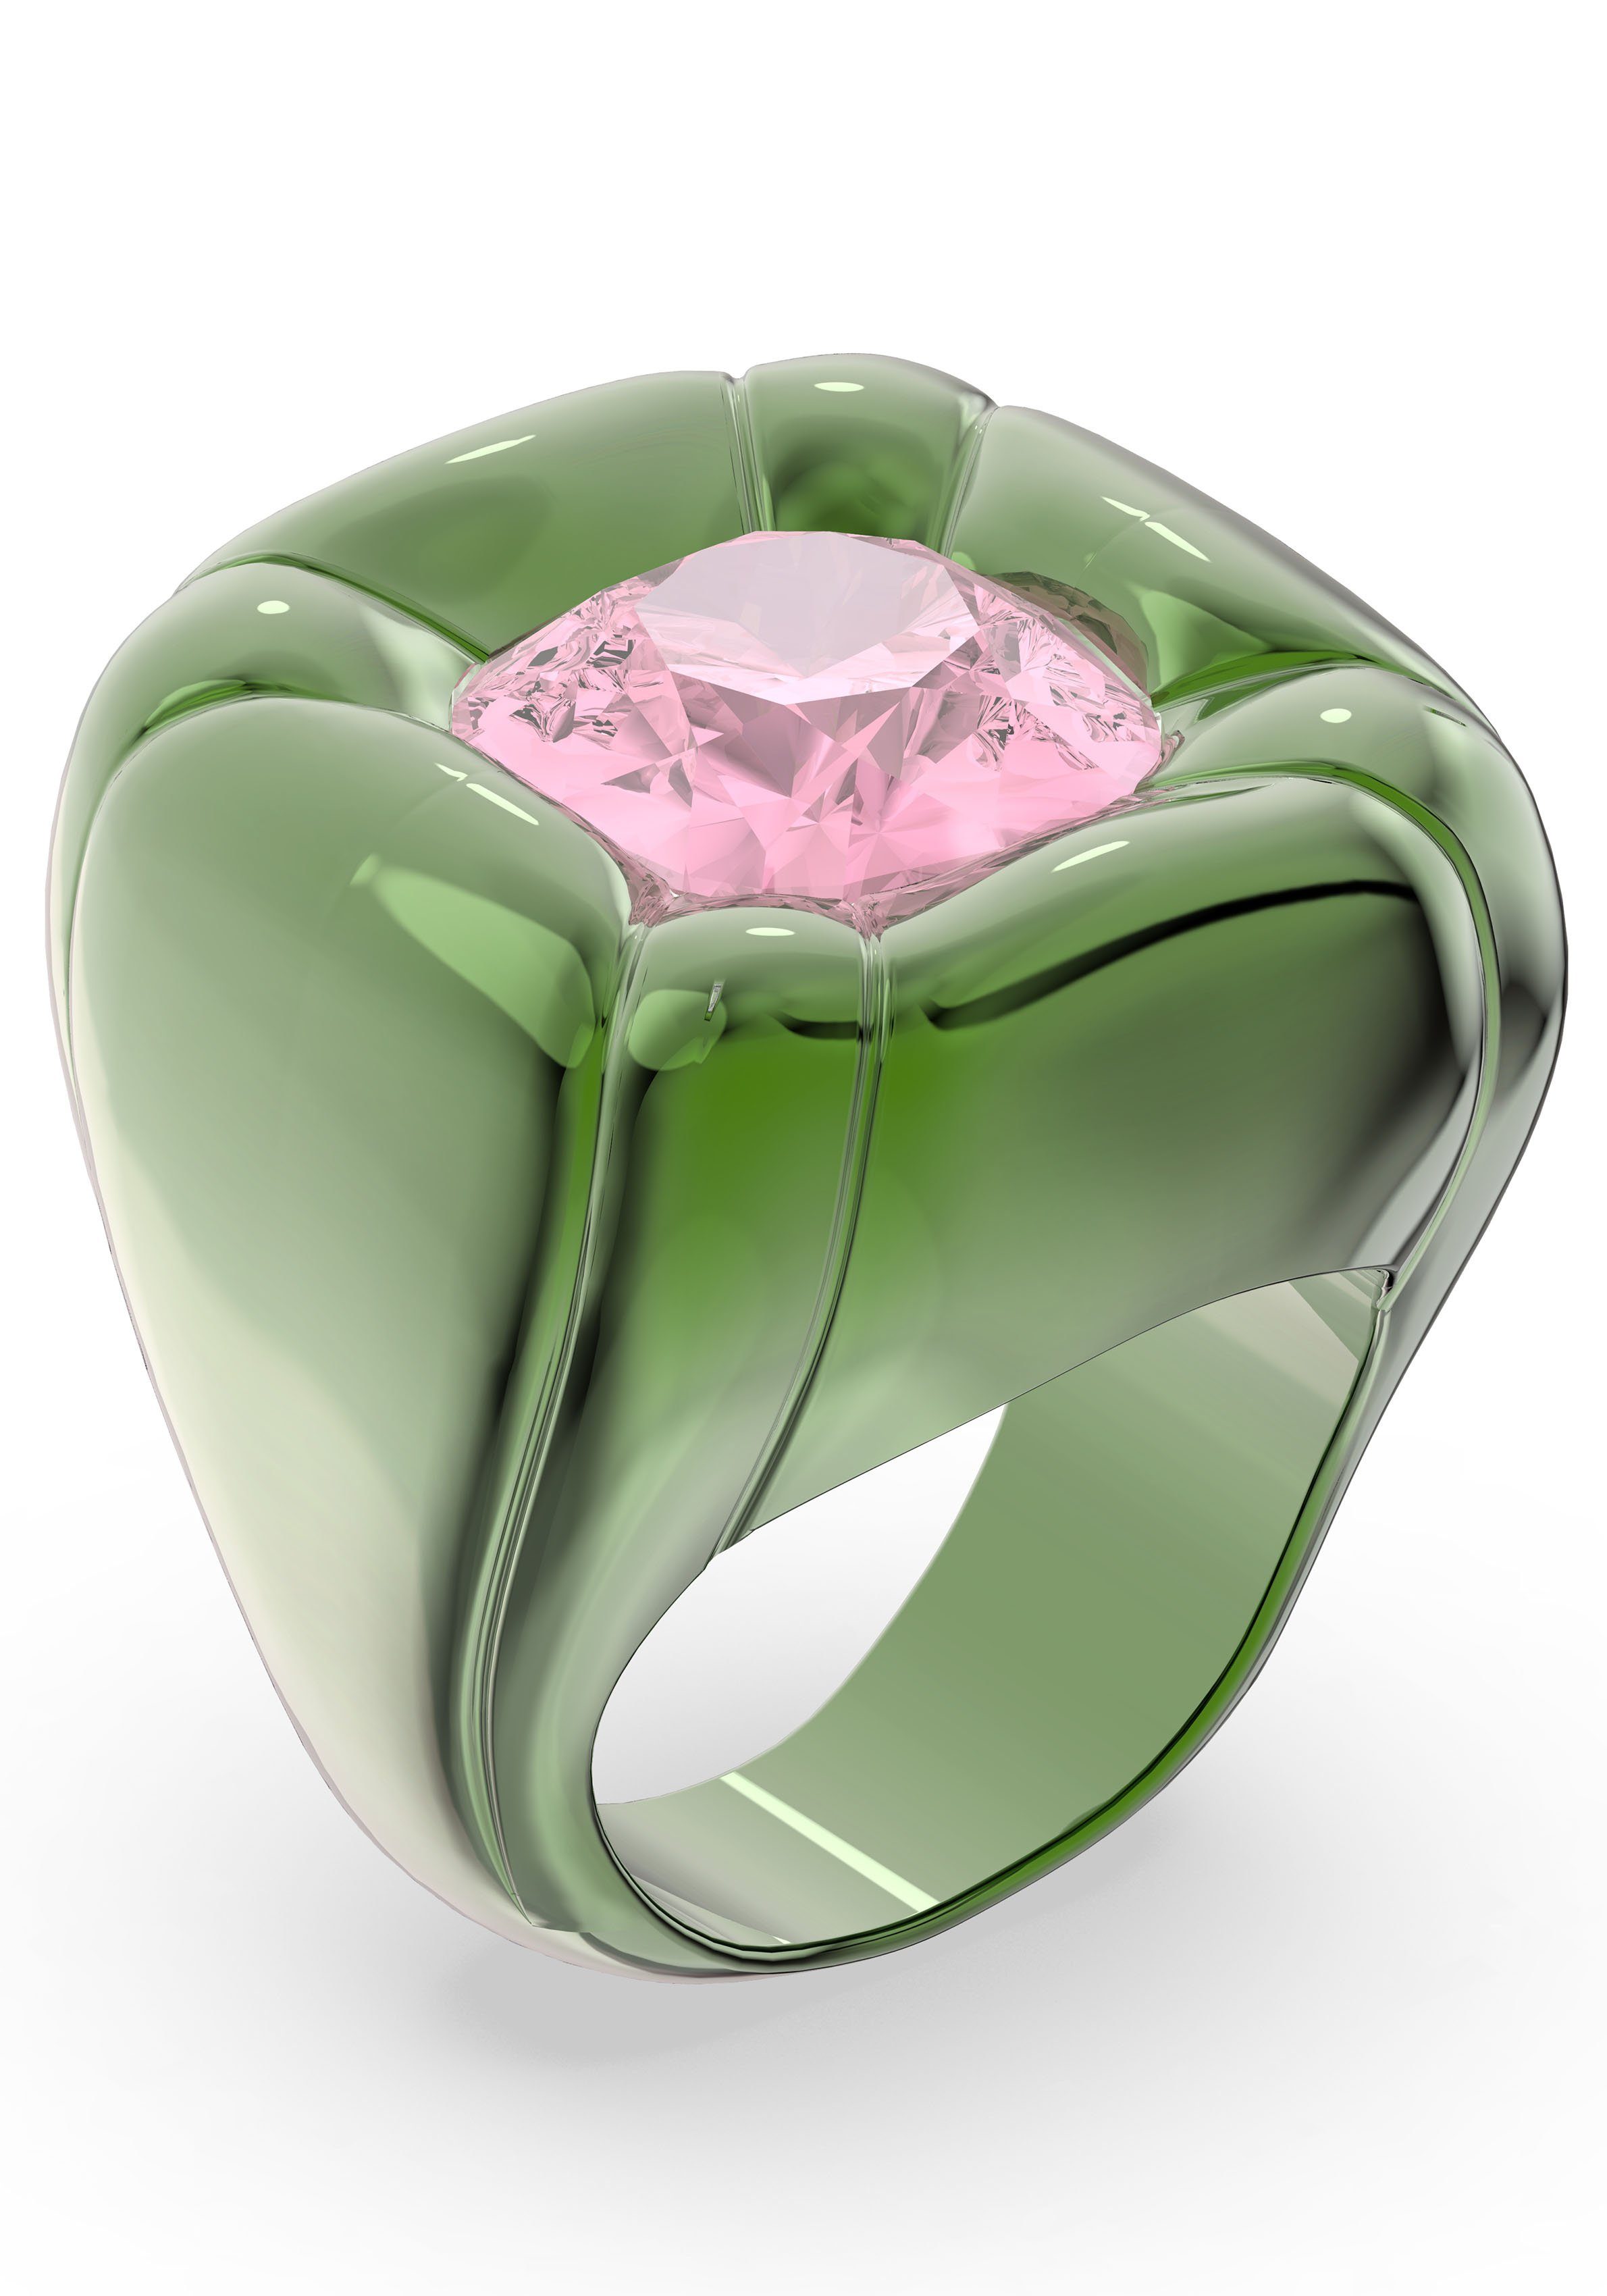 grün-rosa Swarovski® Kristall mit Swarovski Dulcis Cocktail Fingerring 5610804,5609725, 5610803,5609721, Ring,